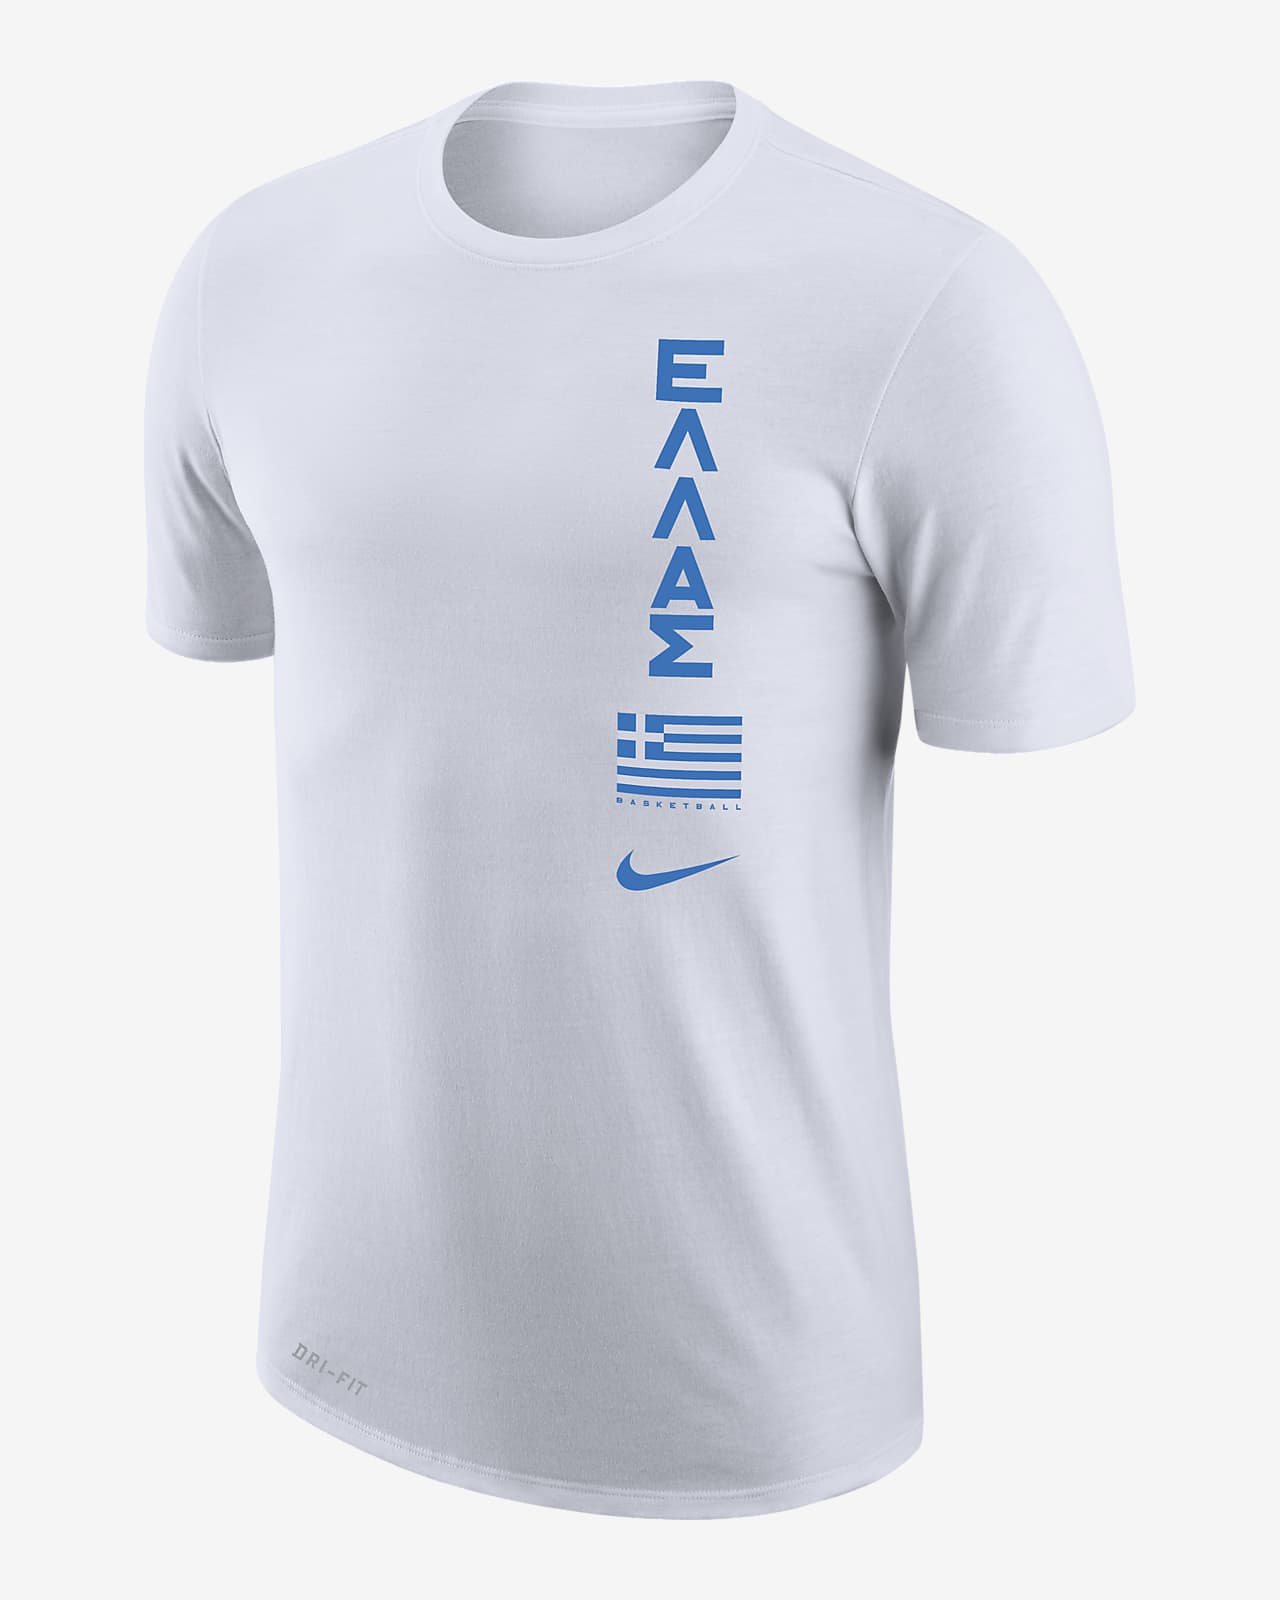 Greece Men's Nike Dri-FIT Basketball T-Shirt. Nike LU